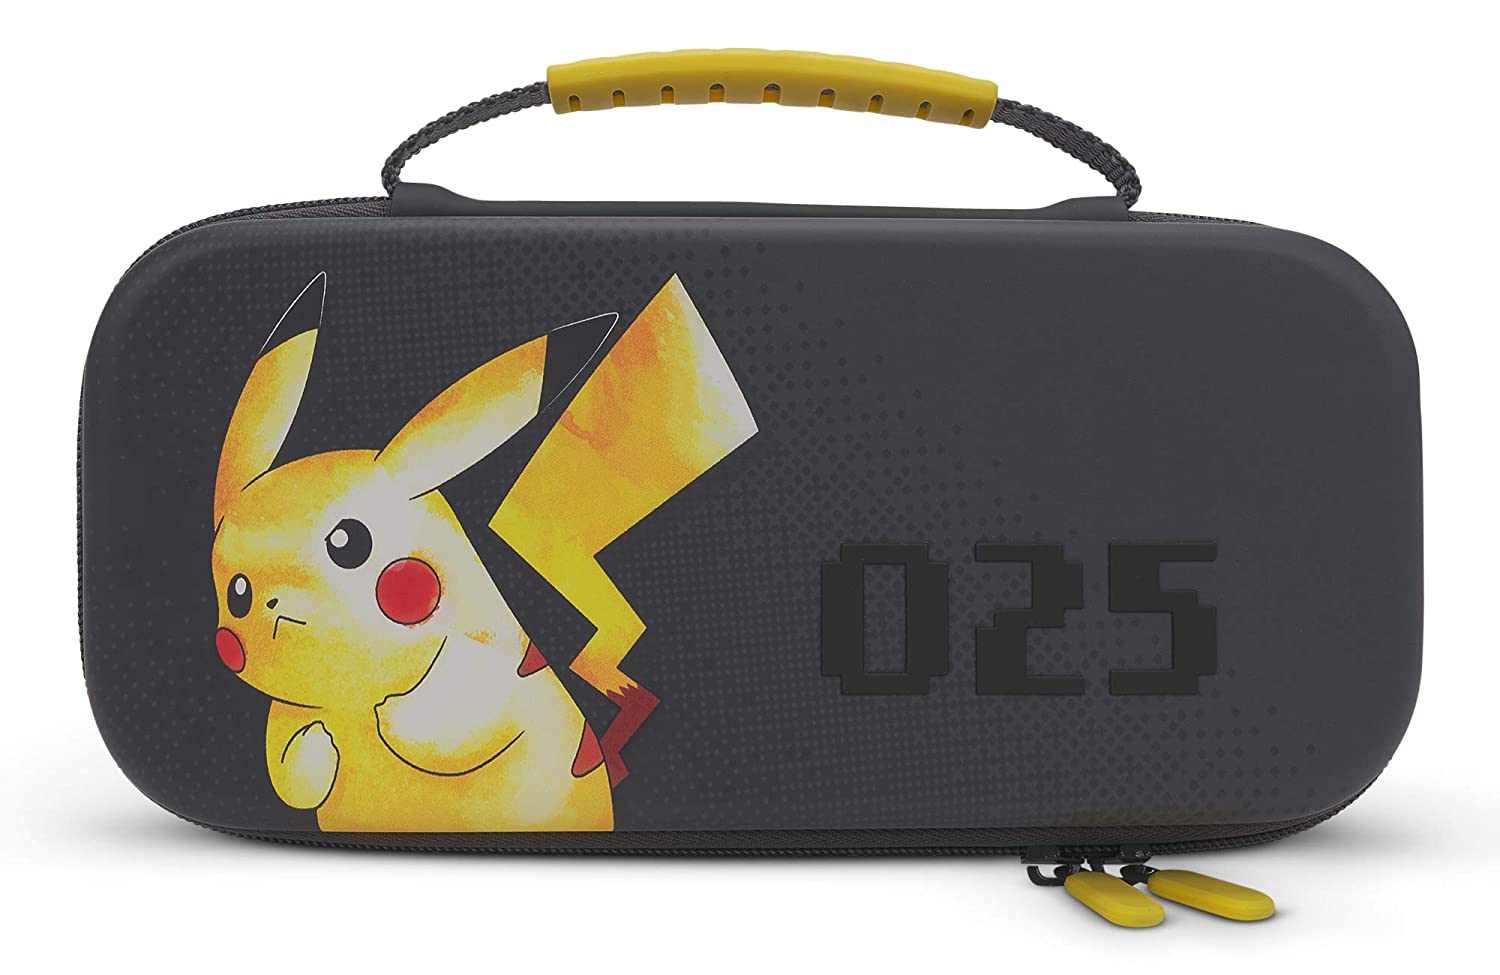 PowerA Nintendo Switch / Lite Pokémon: Pikachu 025 védőtok